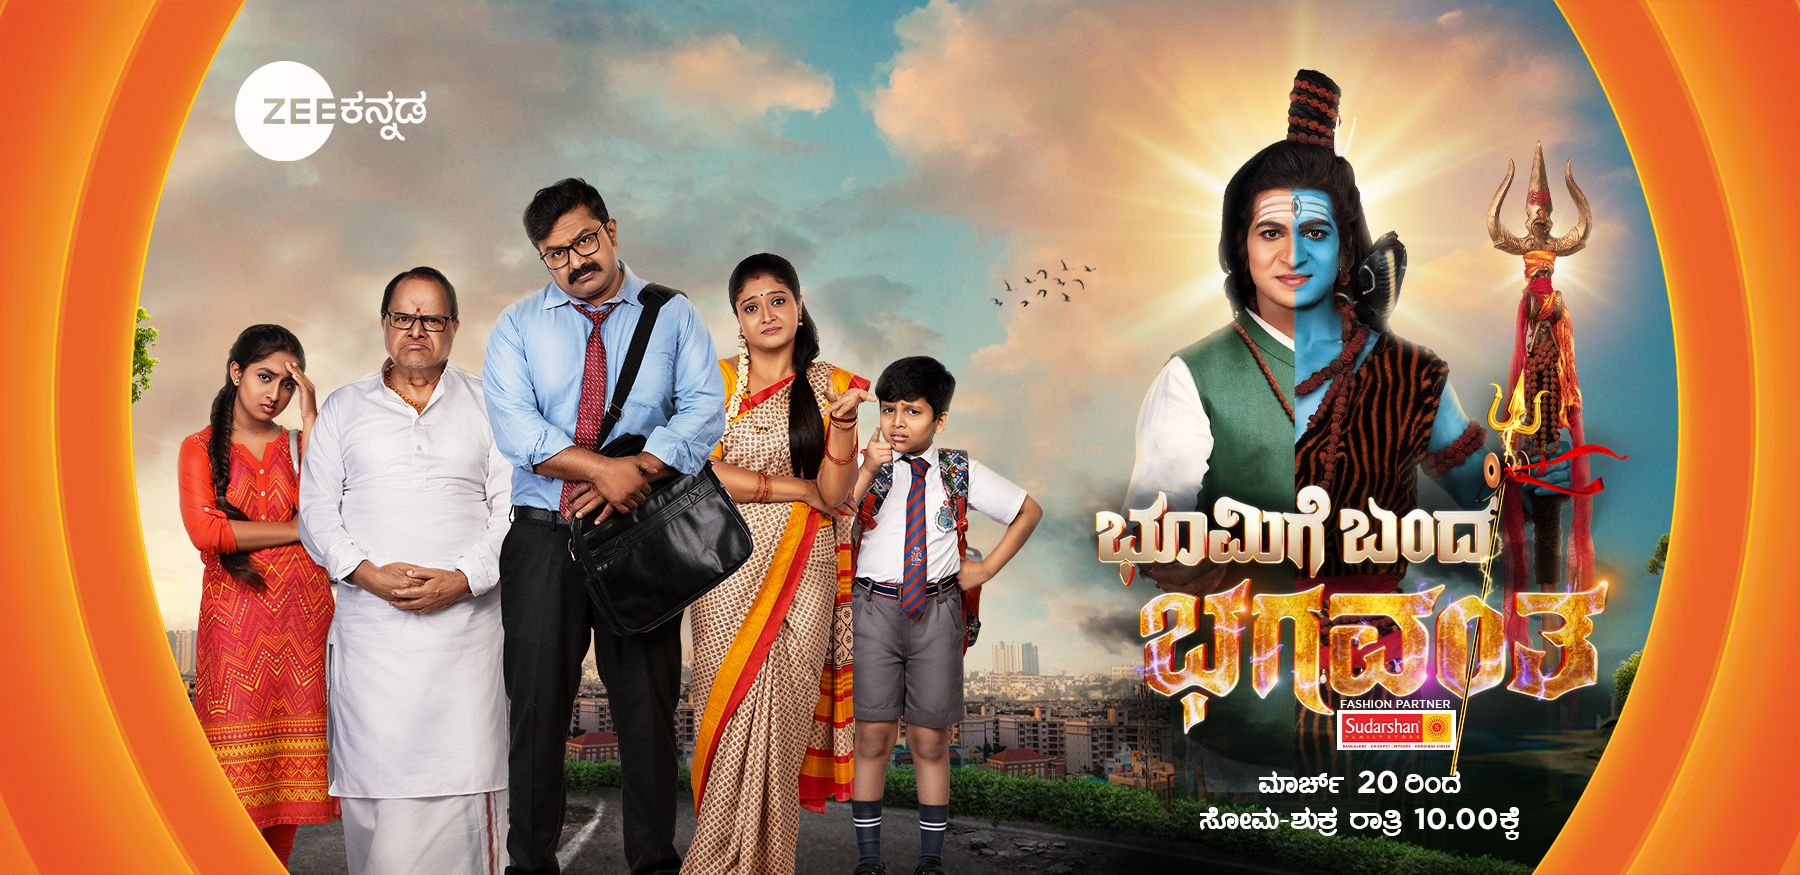 Rama Bhakta Hanumantha Zee Kannada Serial Launching on 5th October 20